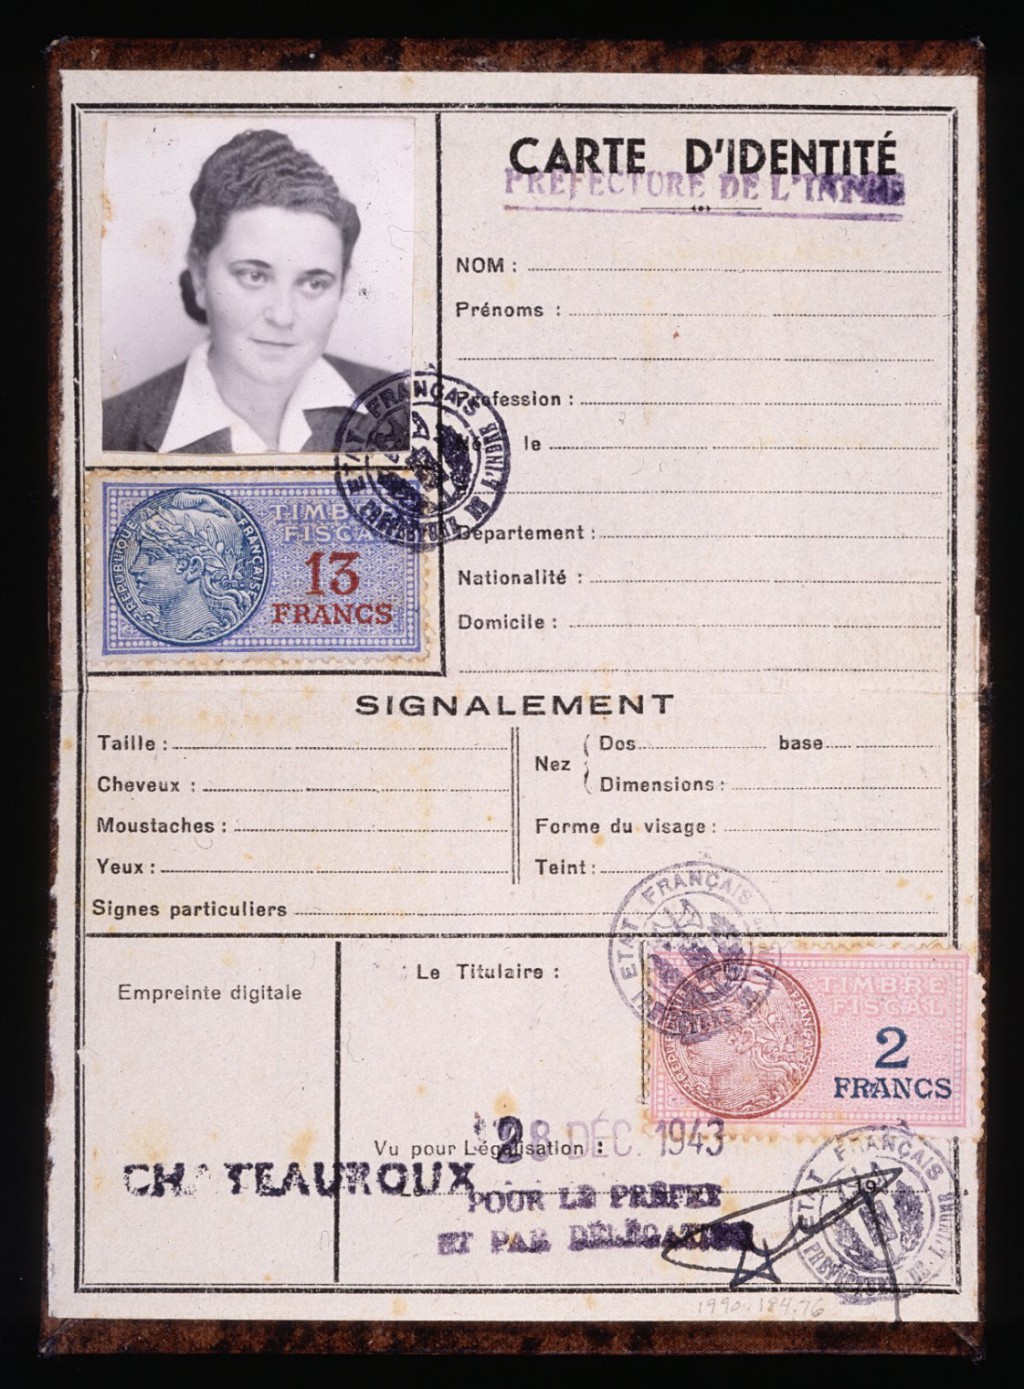 Documentation for a false identity: Simone Weil [LCID: 1998z08j]